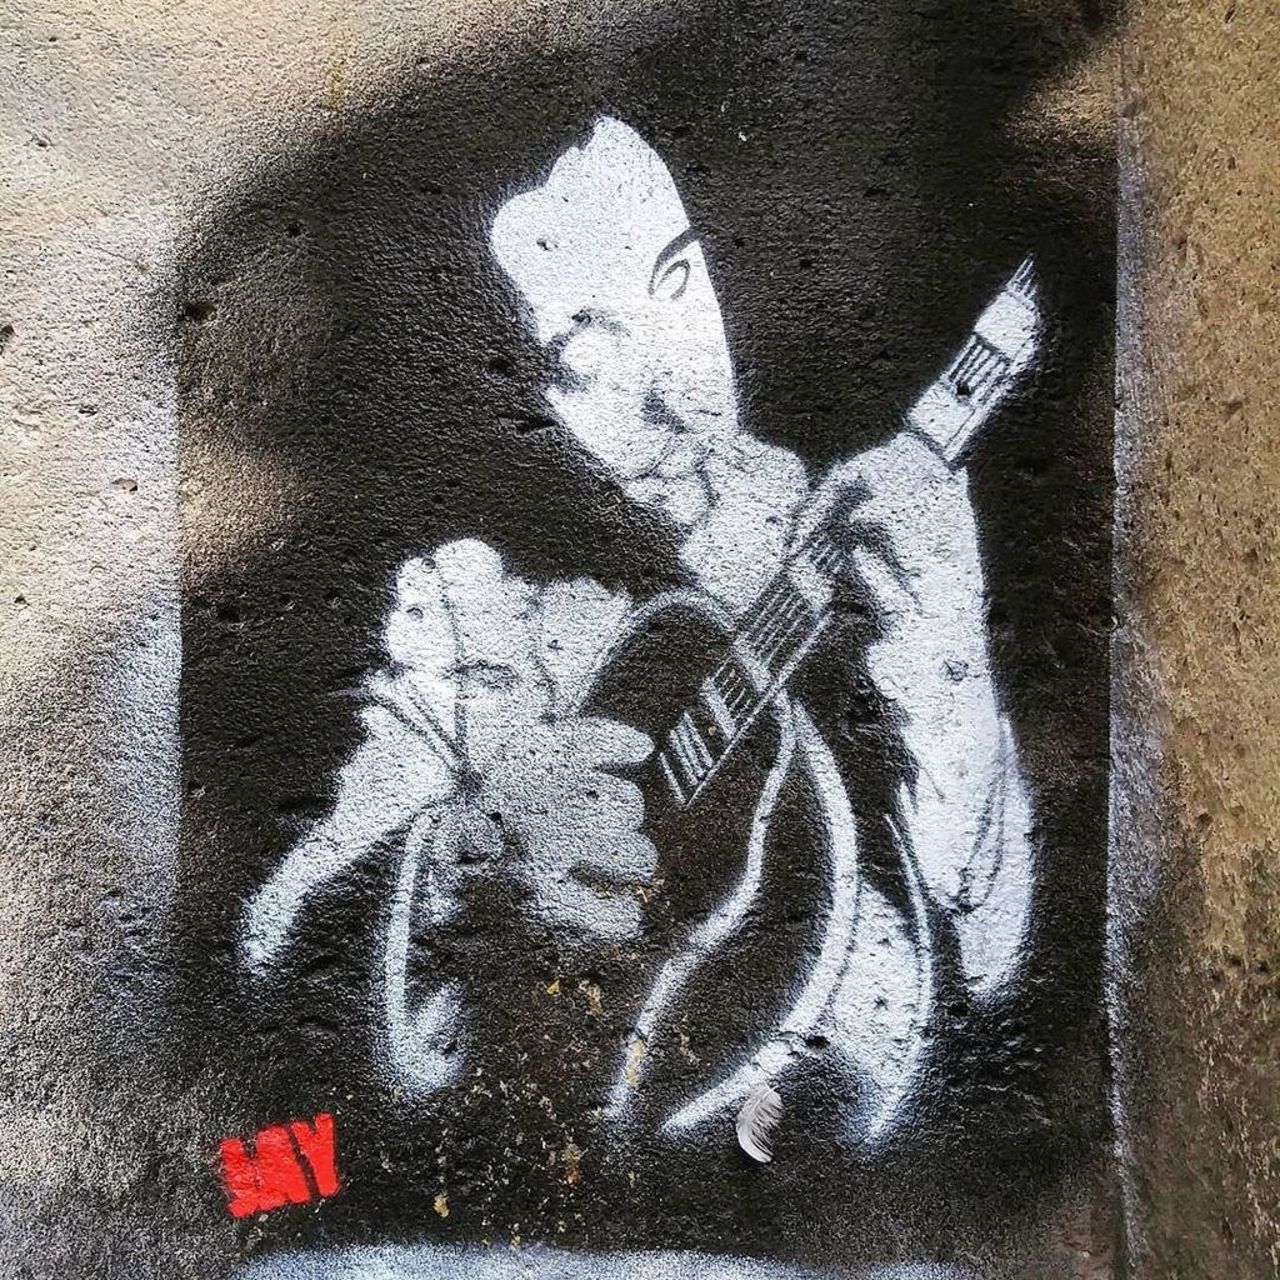 Jay, rue saint-sauveur #urbanartparis #urbanart #arturbain #streetart #streetartparis #arturbain  #graffiti #stenci… https://t.co/QUKYc70SUH